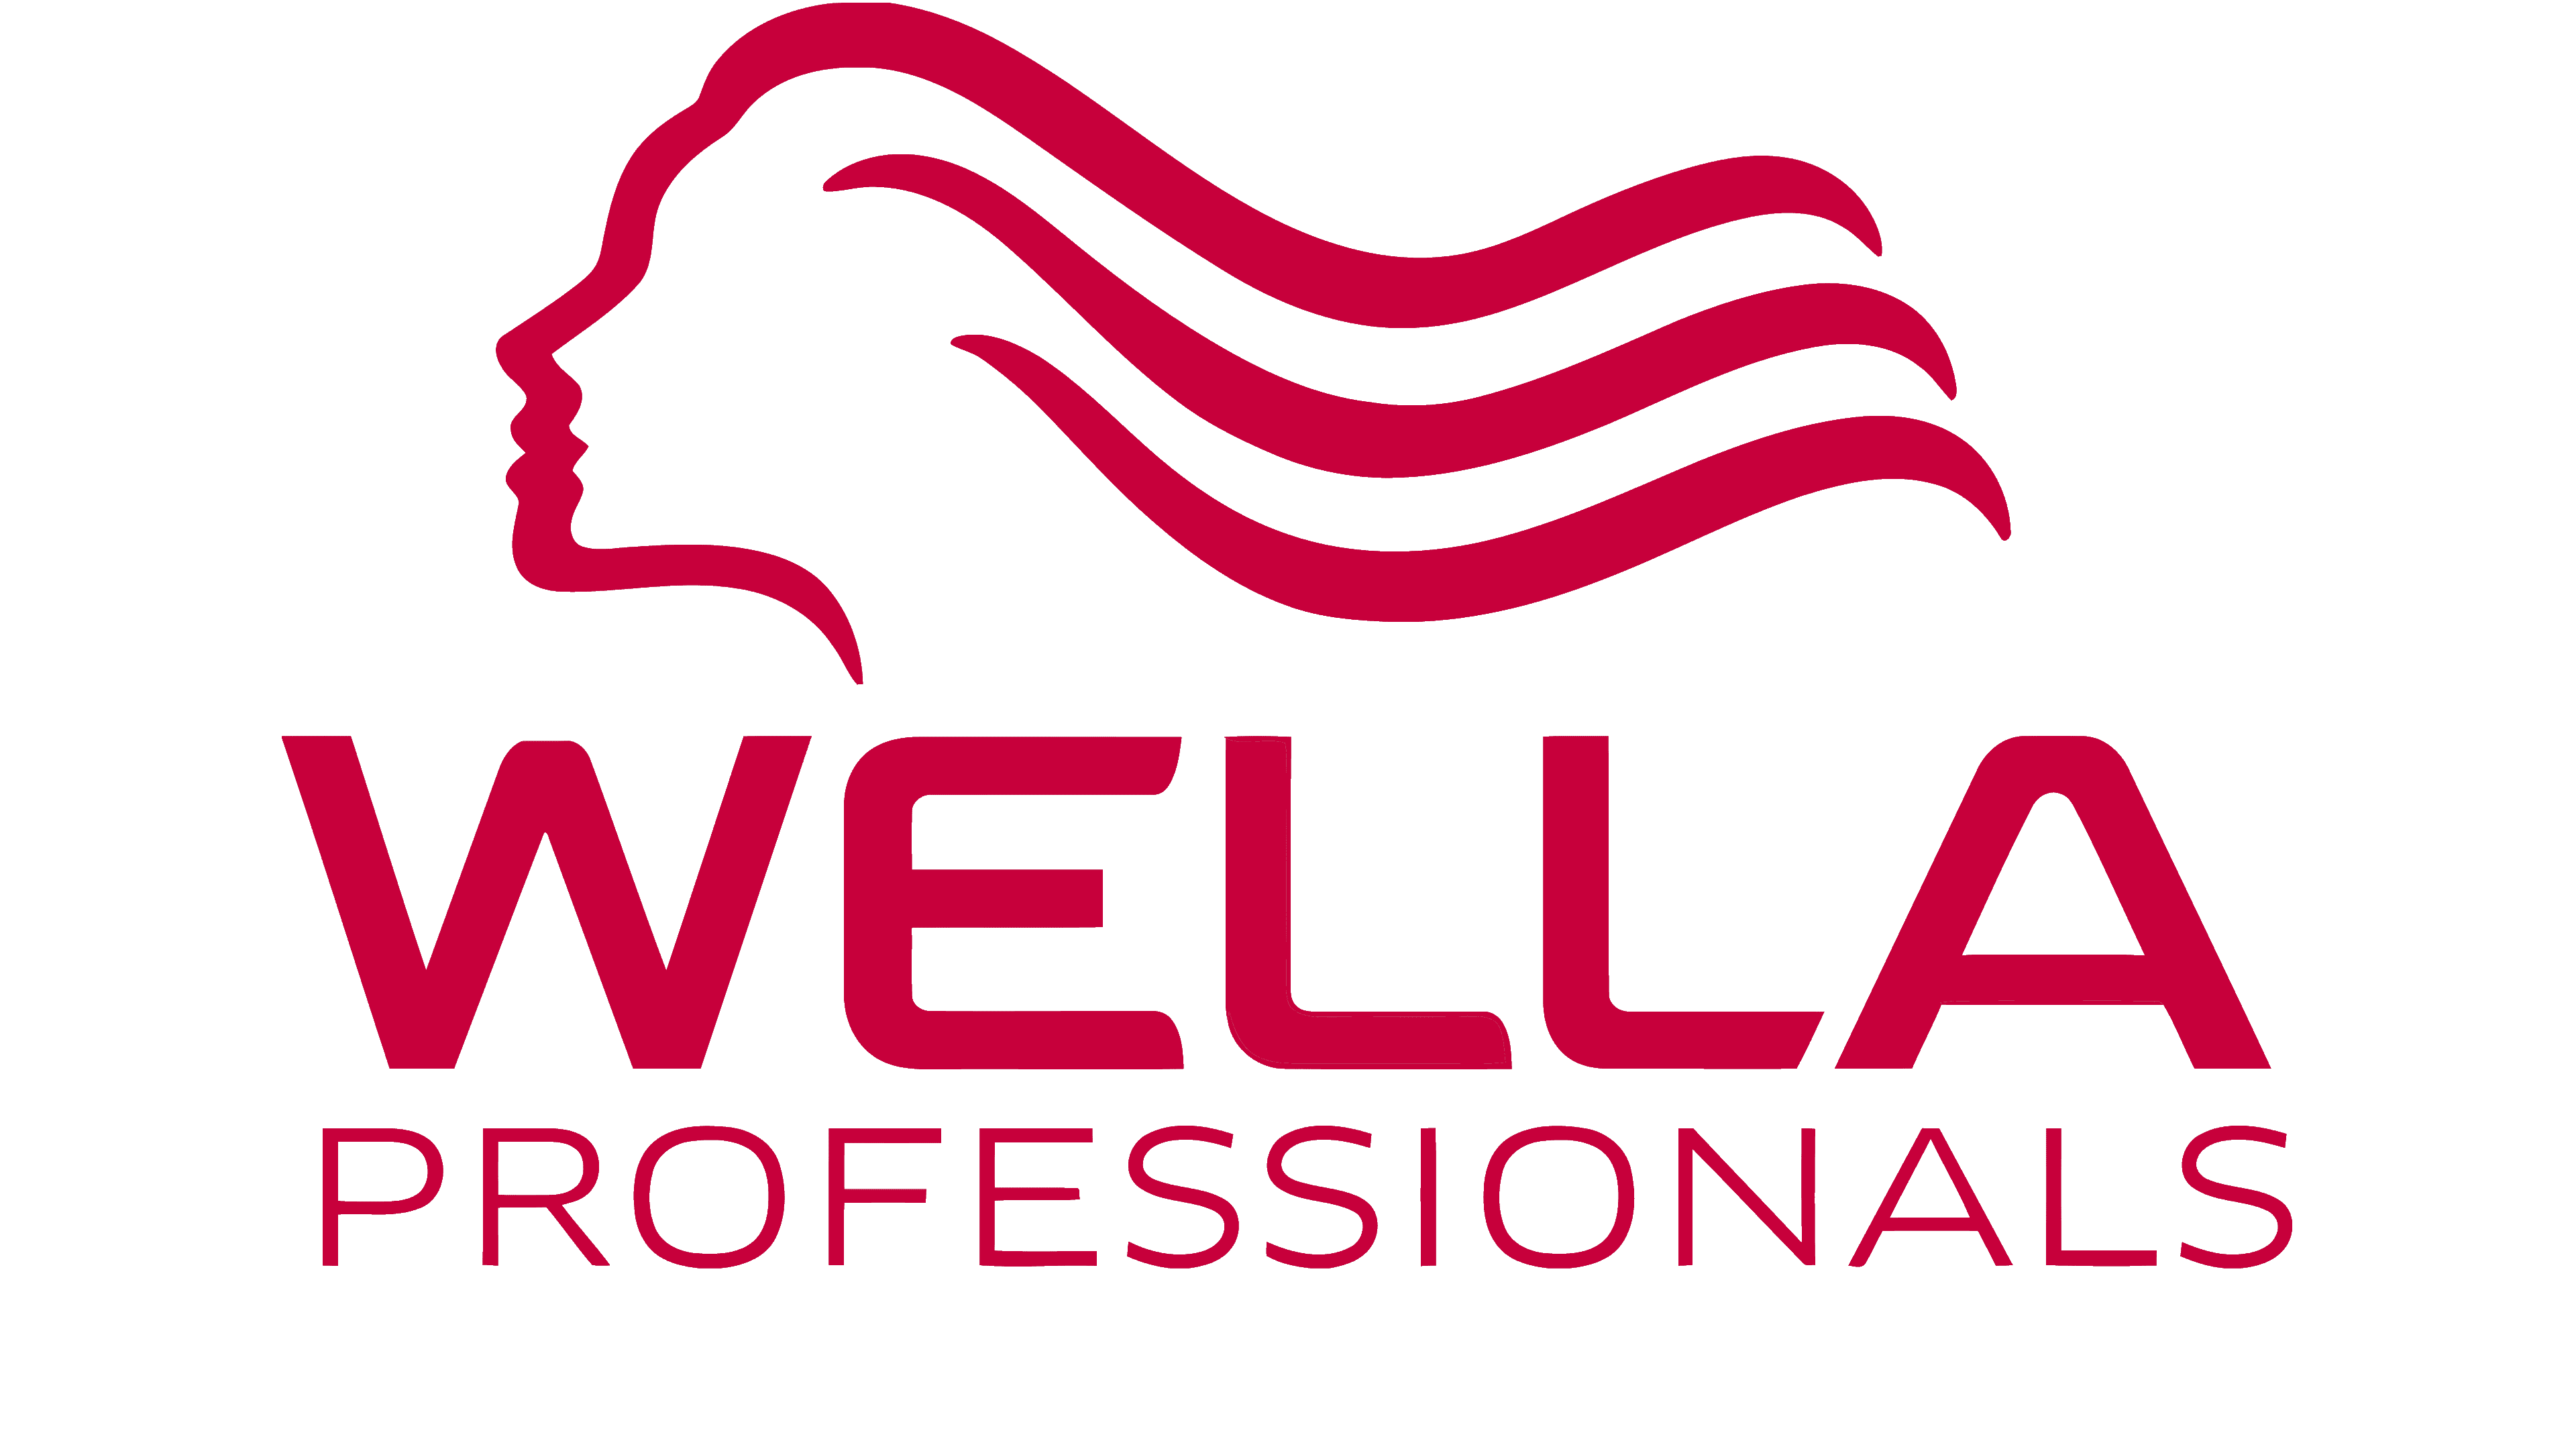 Wella official logo